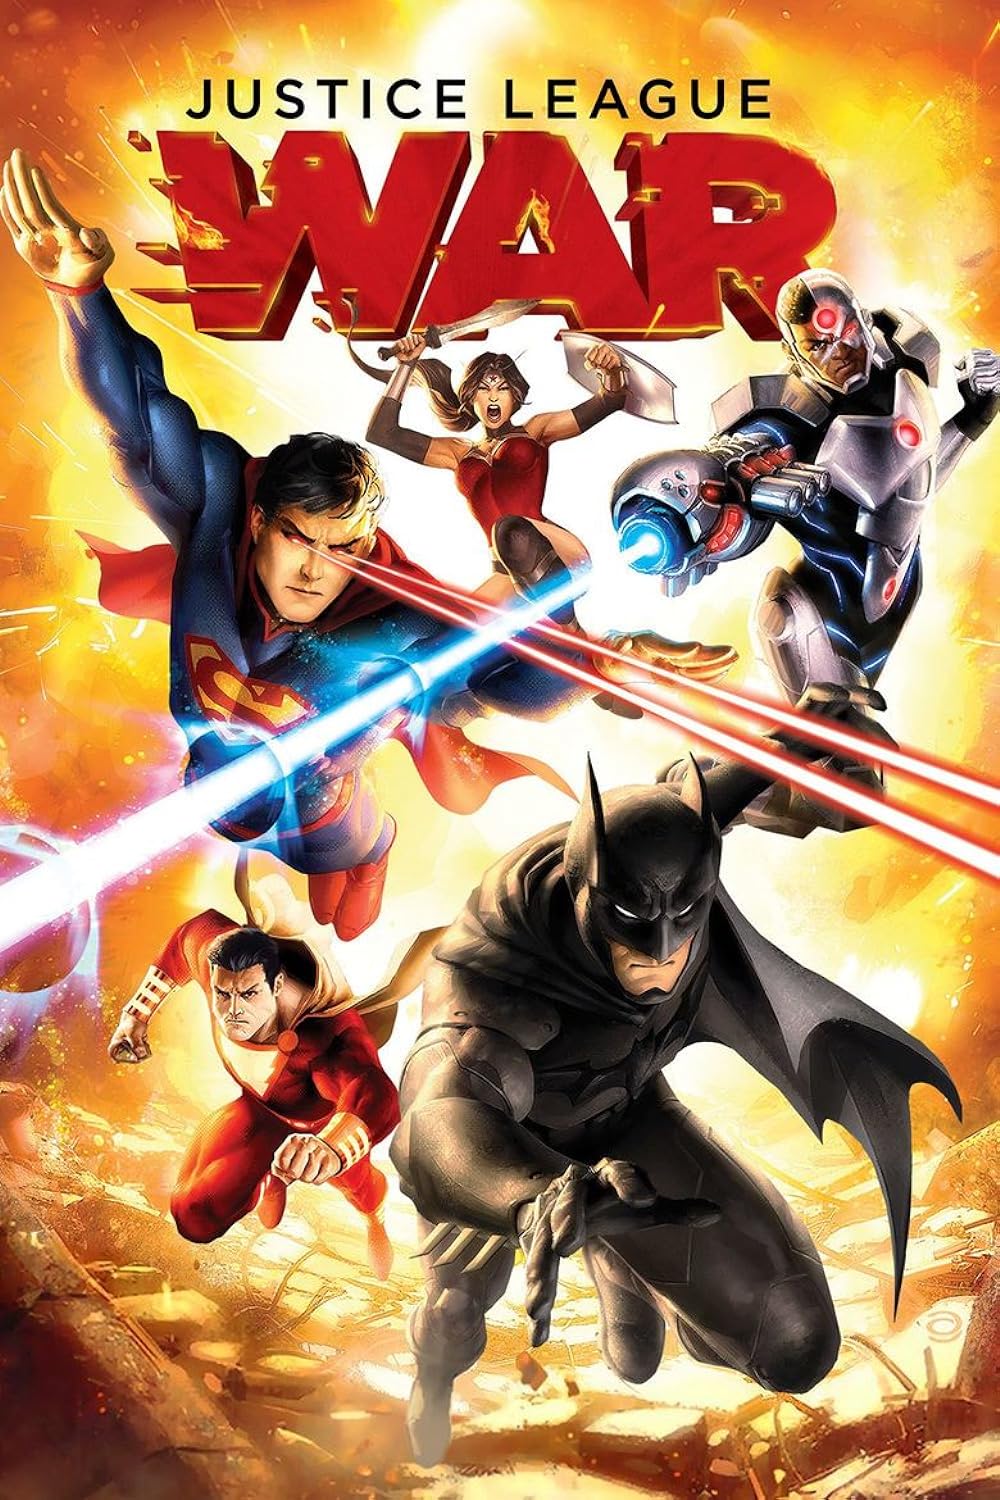 FULL MOVIE: Justice League: War (2014)